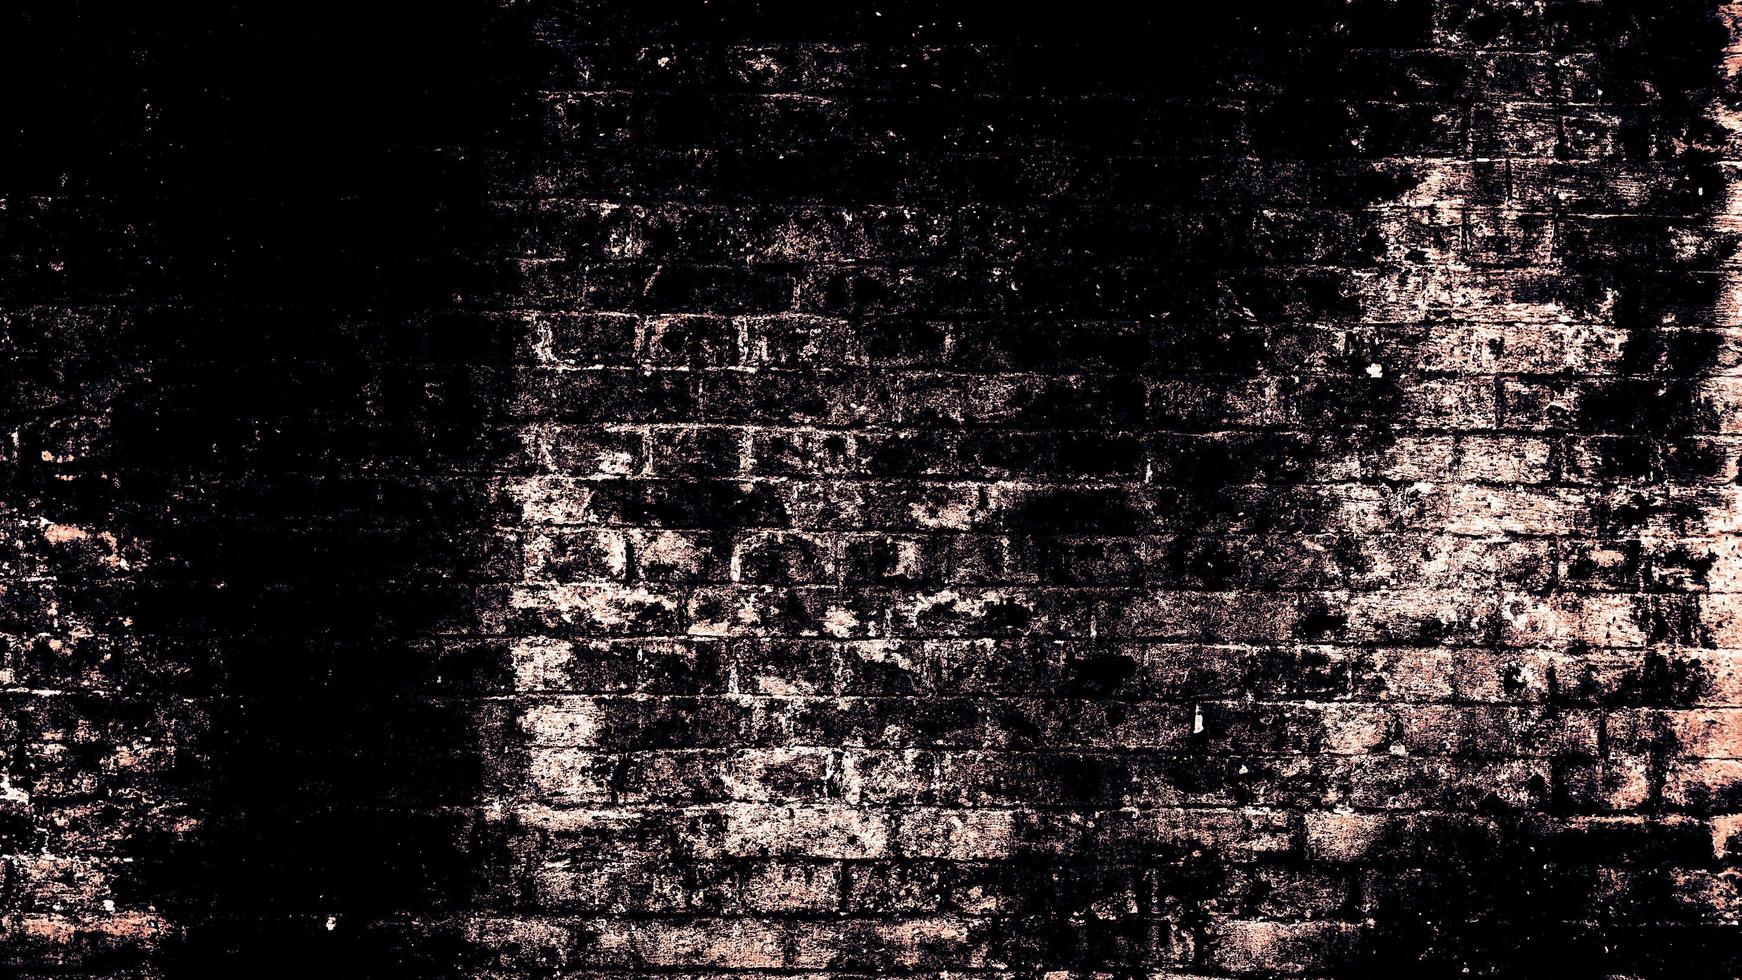 dark texture background of old cement concrete photo